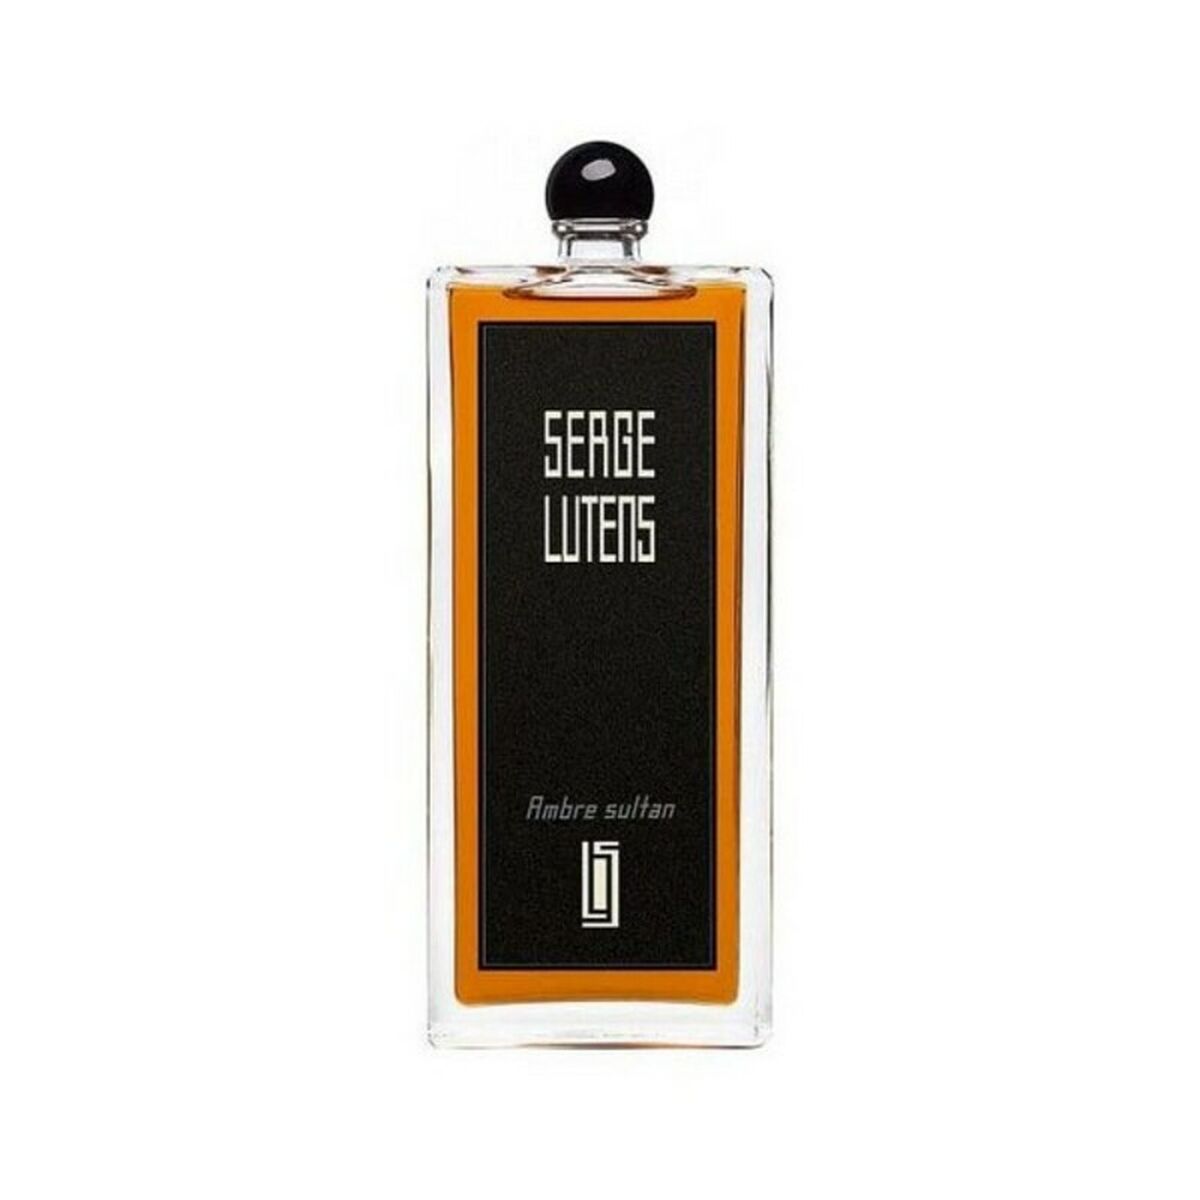 Perfume Unisex Ambre Sultan Serge Lutens COLLECTION NOIRE (100 ml) EDP 100 ml